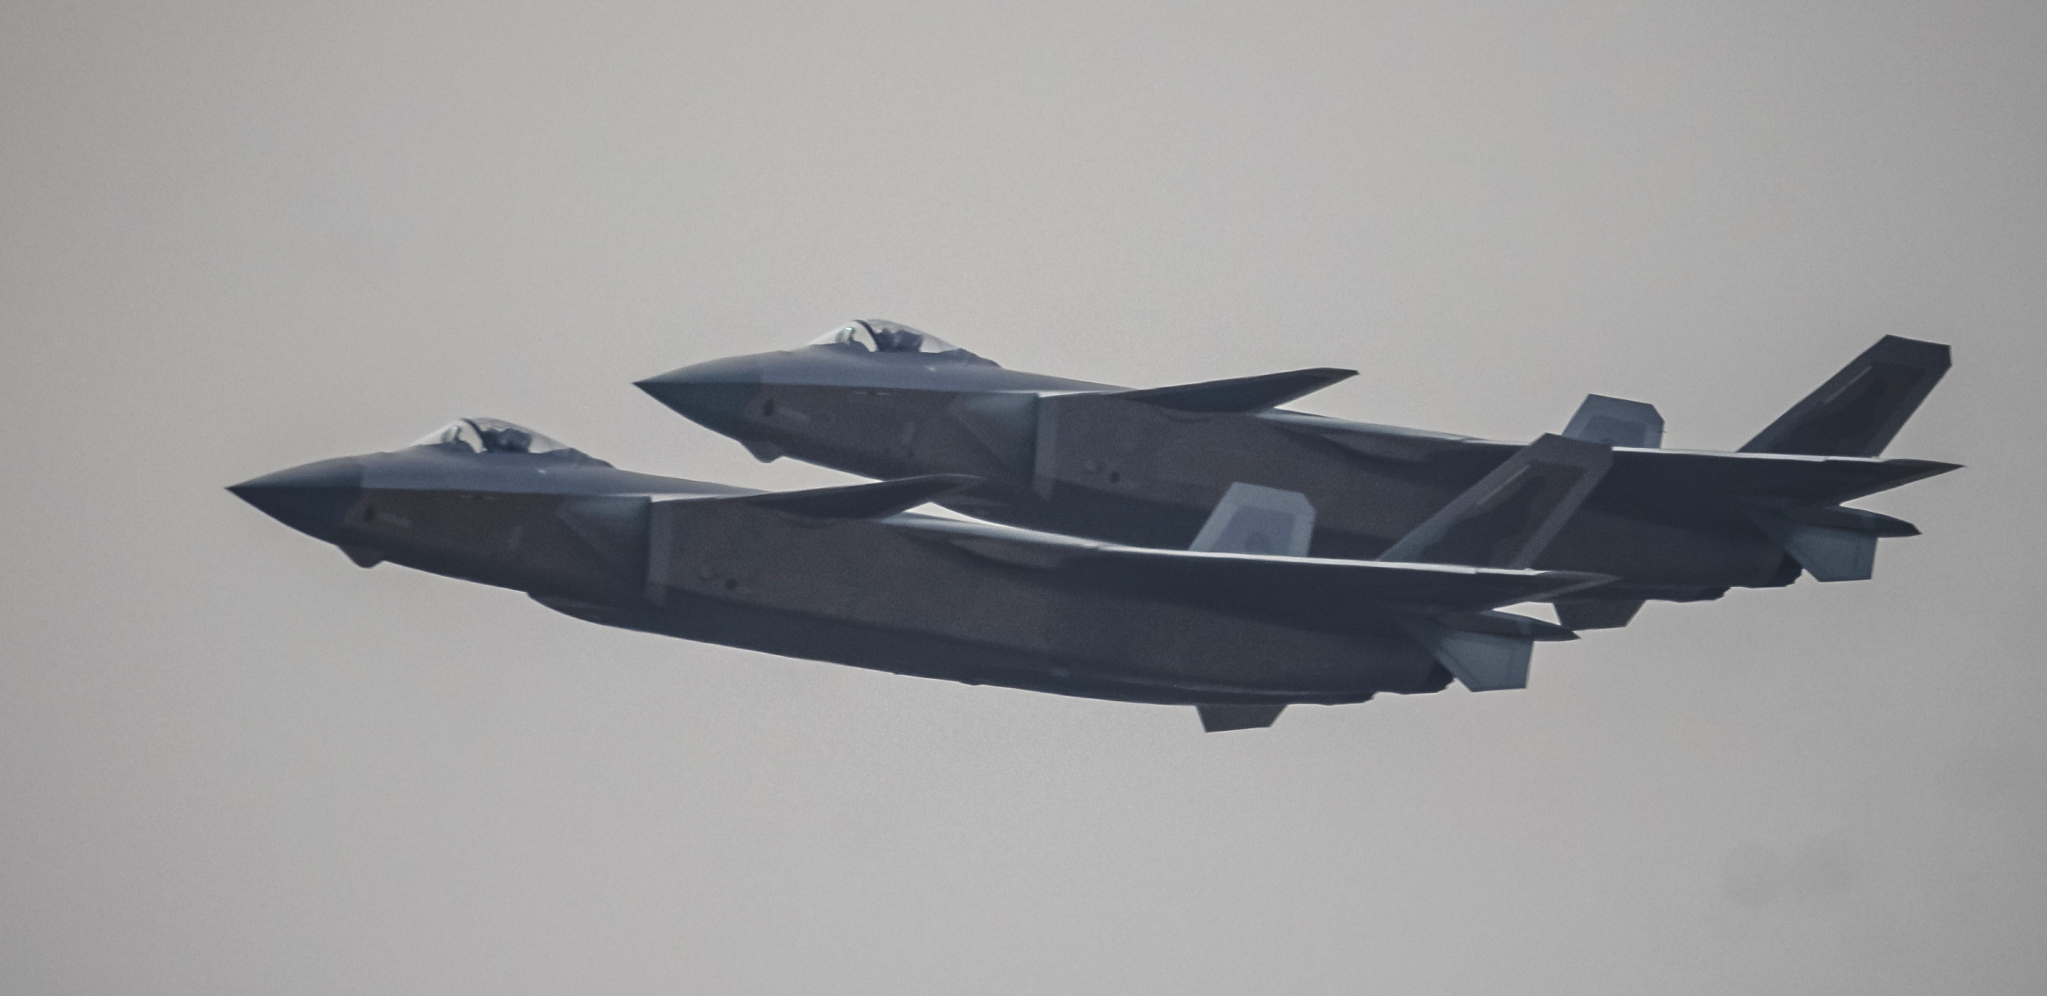 NAPETO KOD TAJVANA! Kina poslala veliki broj ratnih aviona, Tajpej hitno podigao lovce